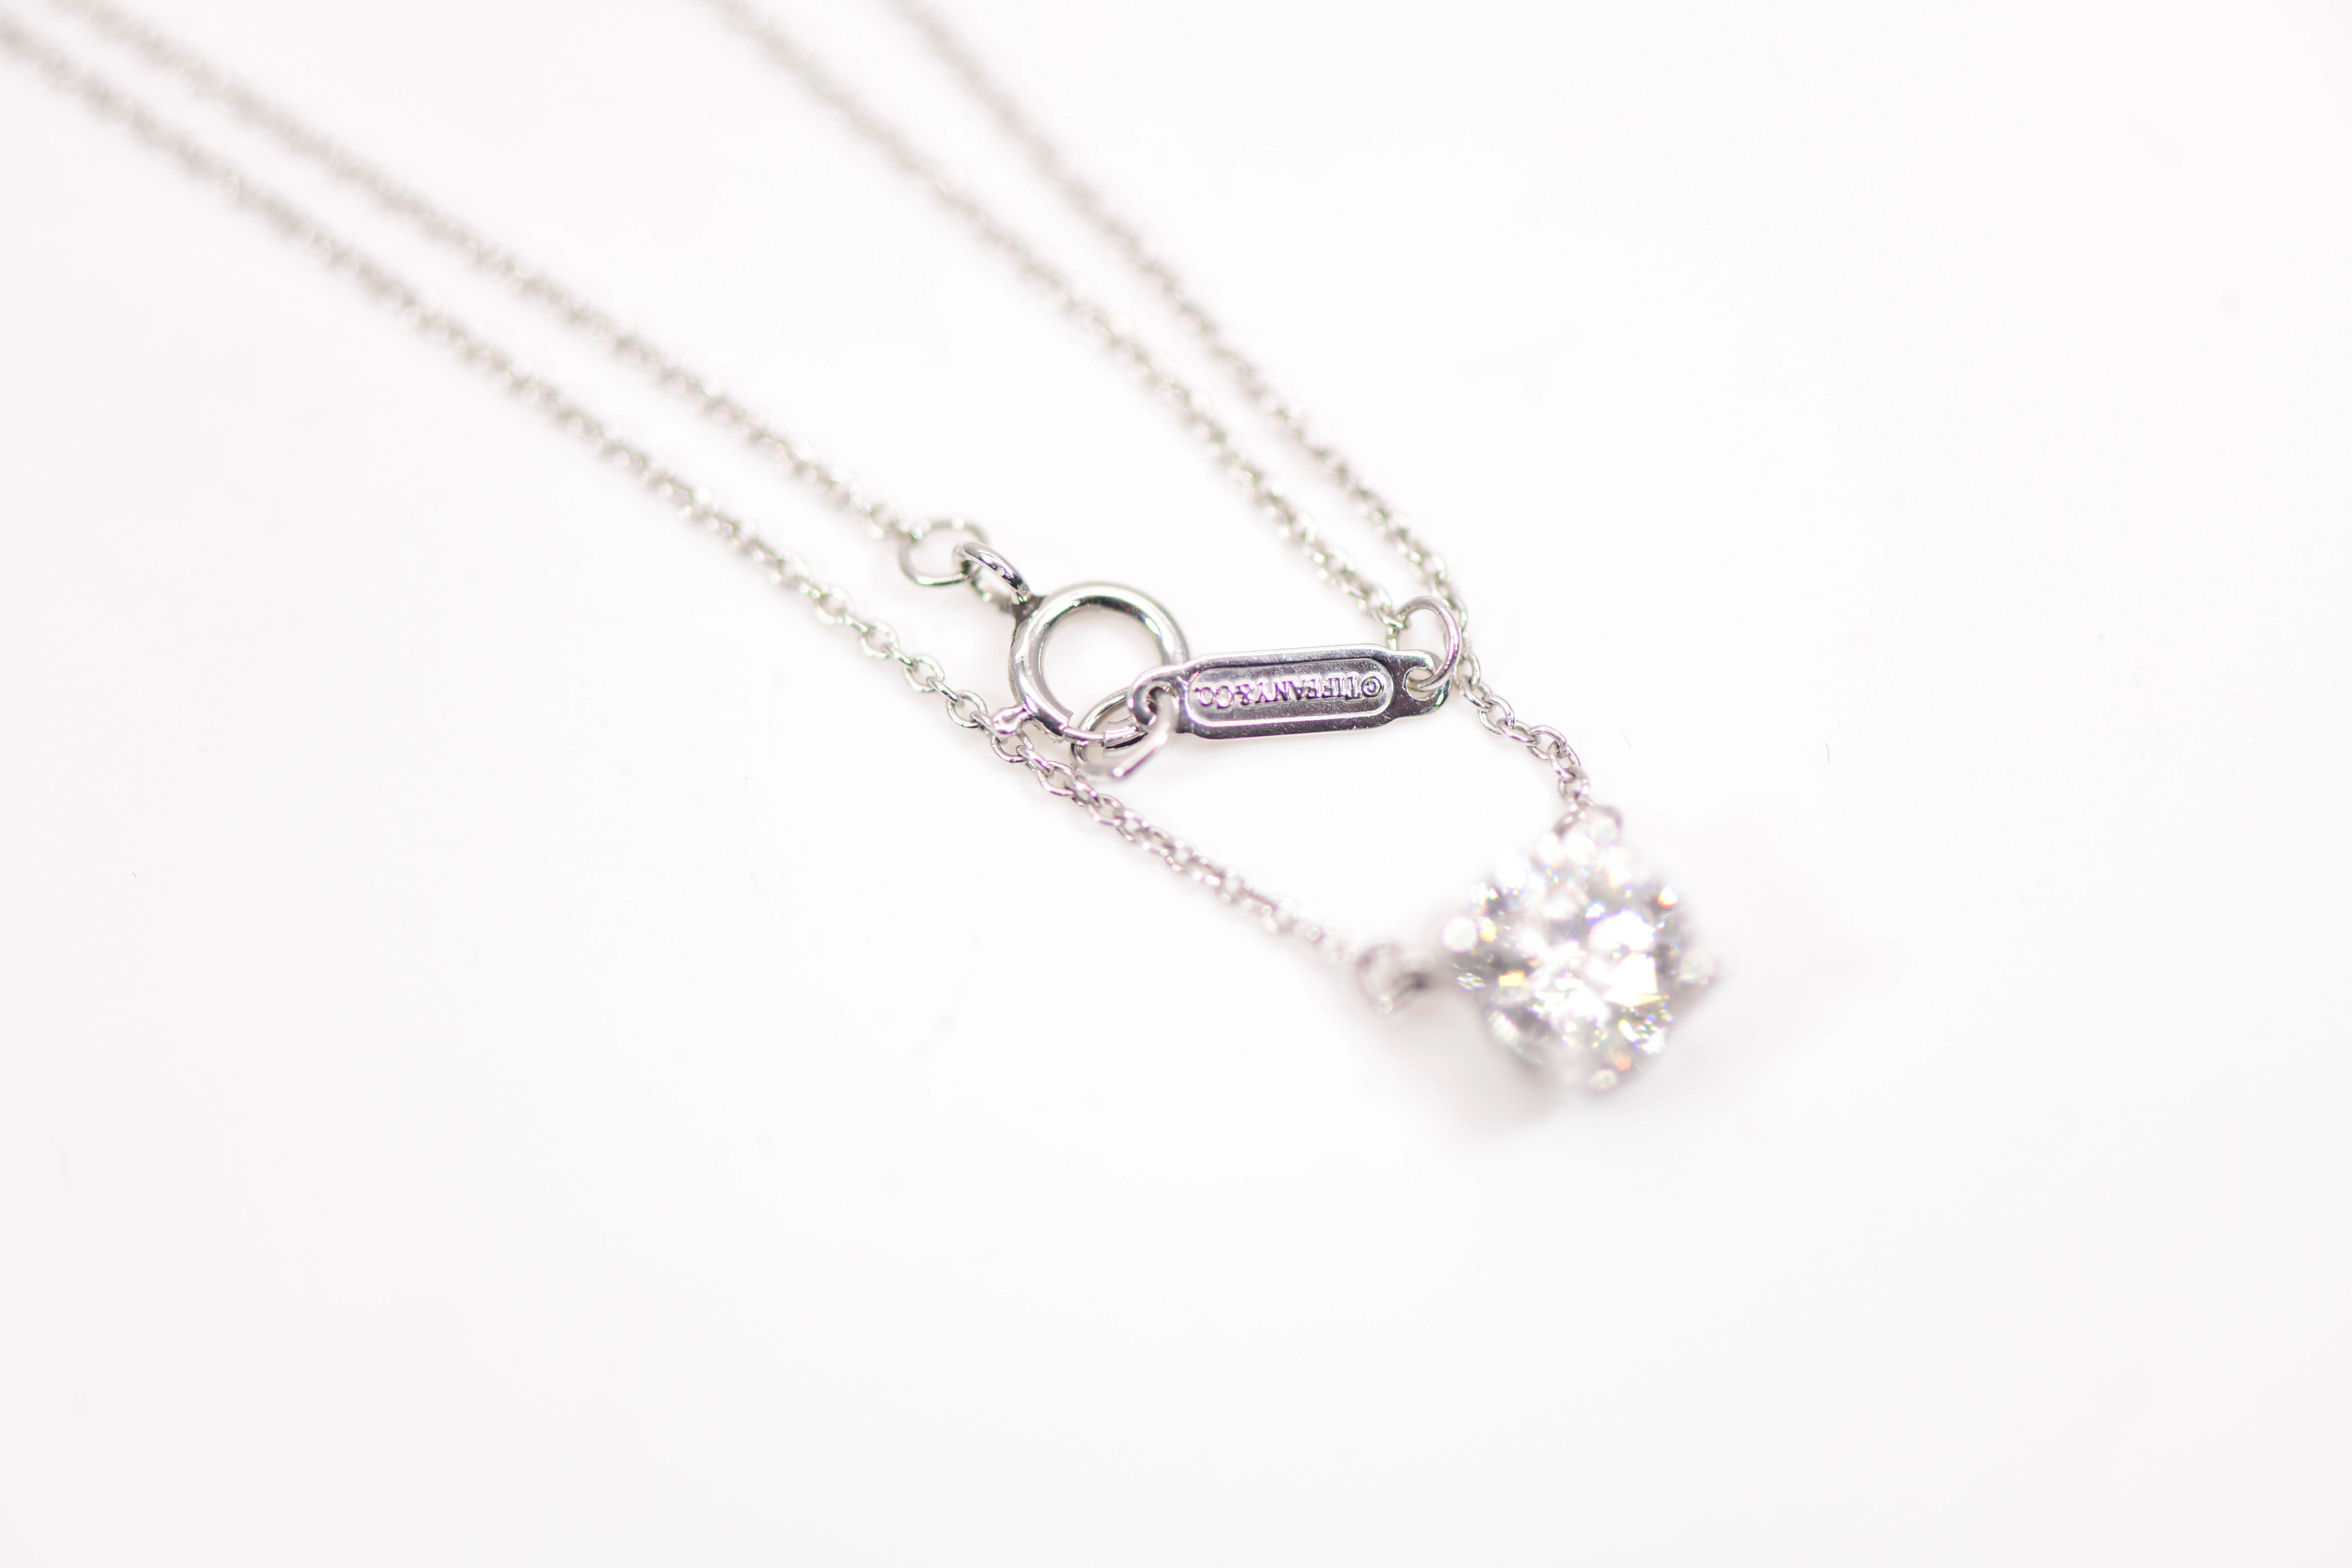 Tiffany & Co. 0.85 ct Solitaire Diamond Pendant Necklace Platinum